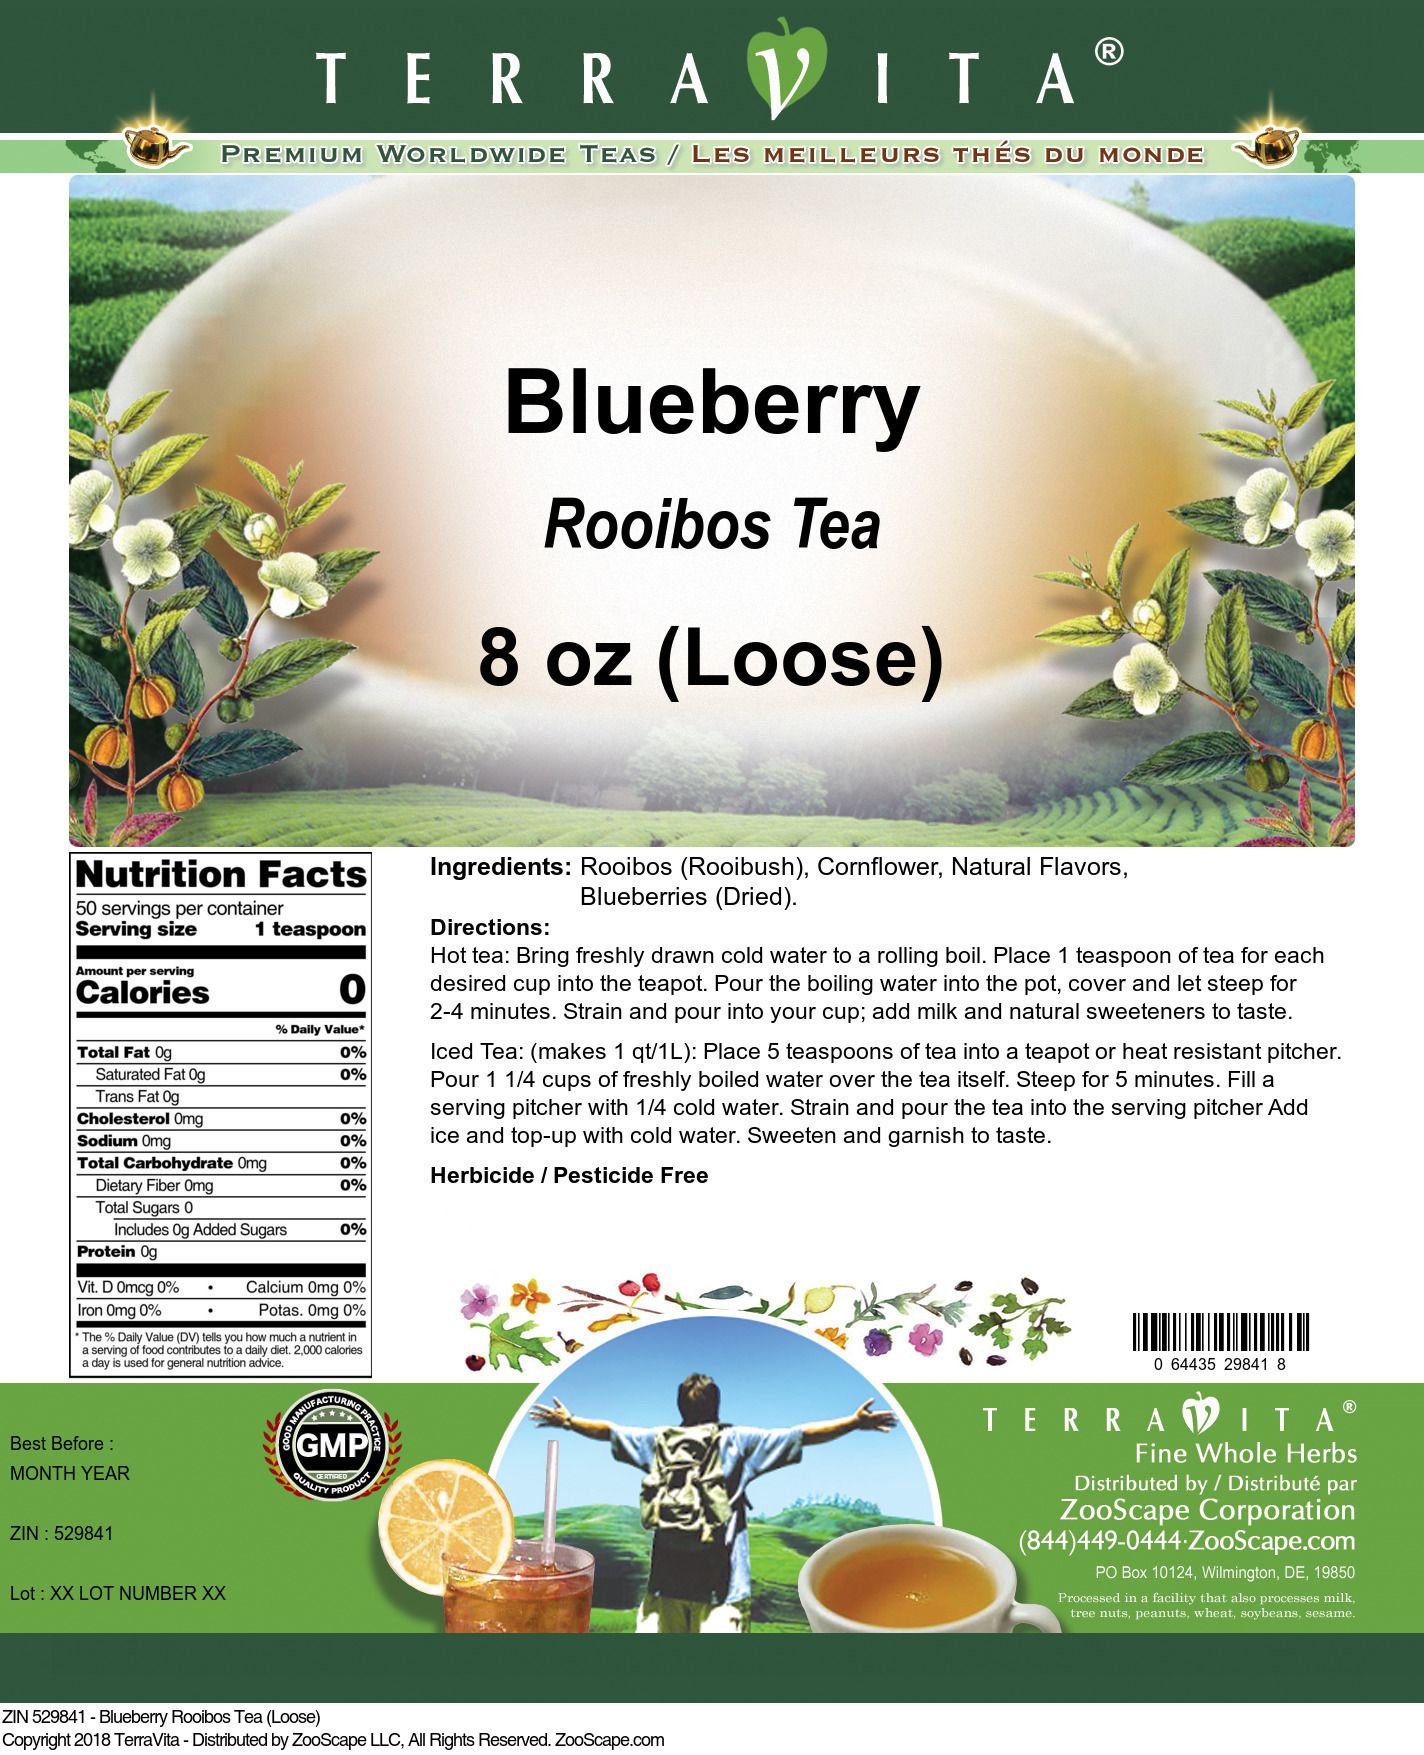 Blueberry Rooibos Tea (Loose) - Label